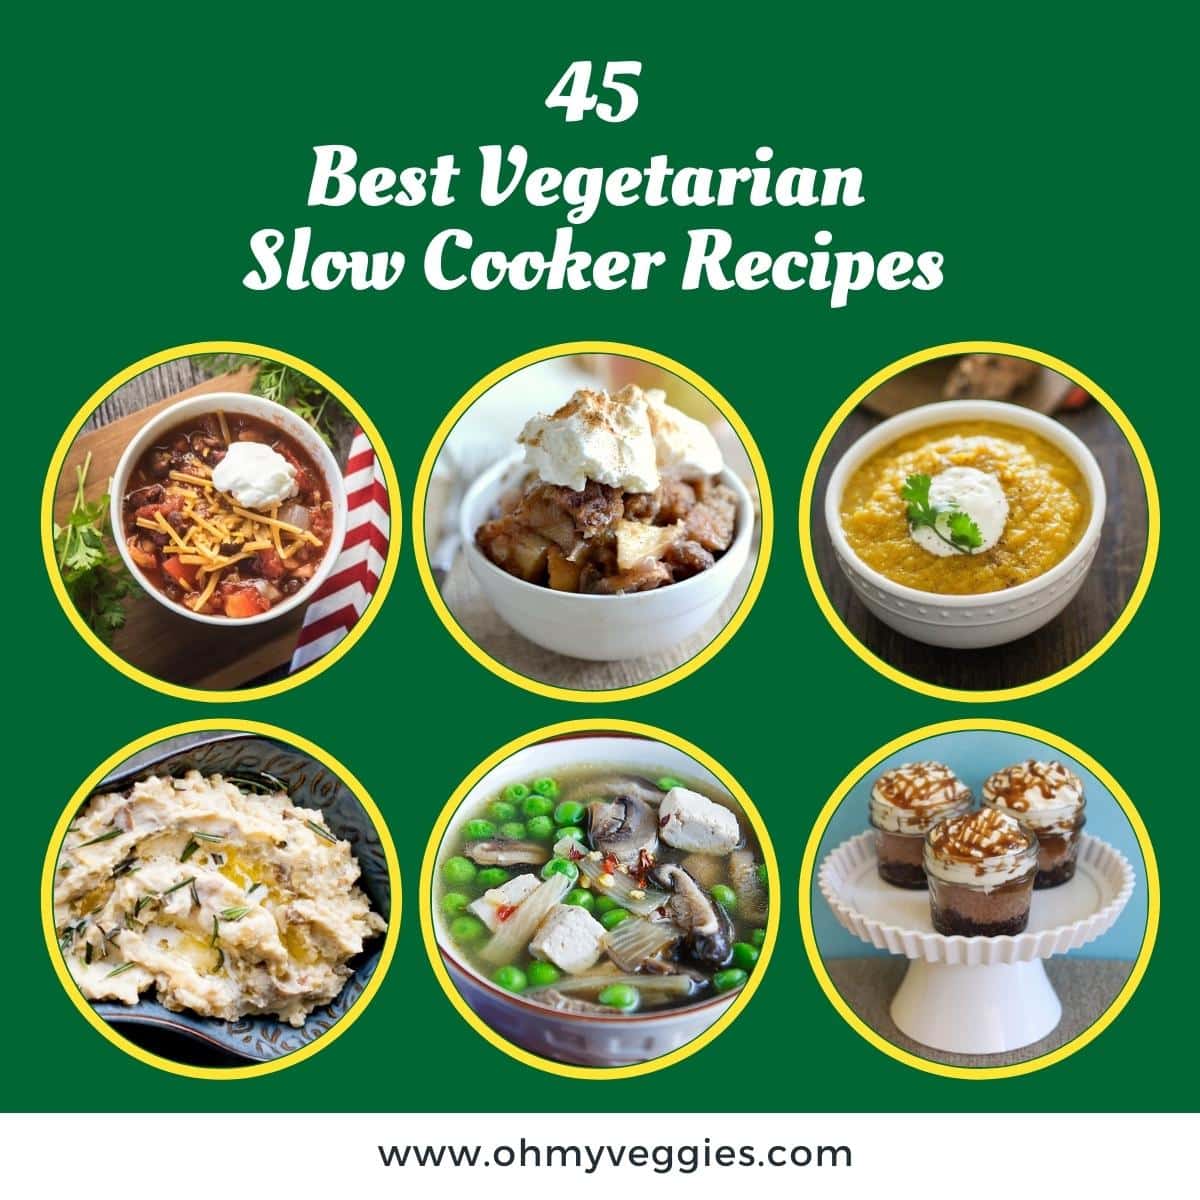 Best Vegetarian Slow Cooker Recipes - Crockpot Faves - Oh My Veggies